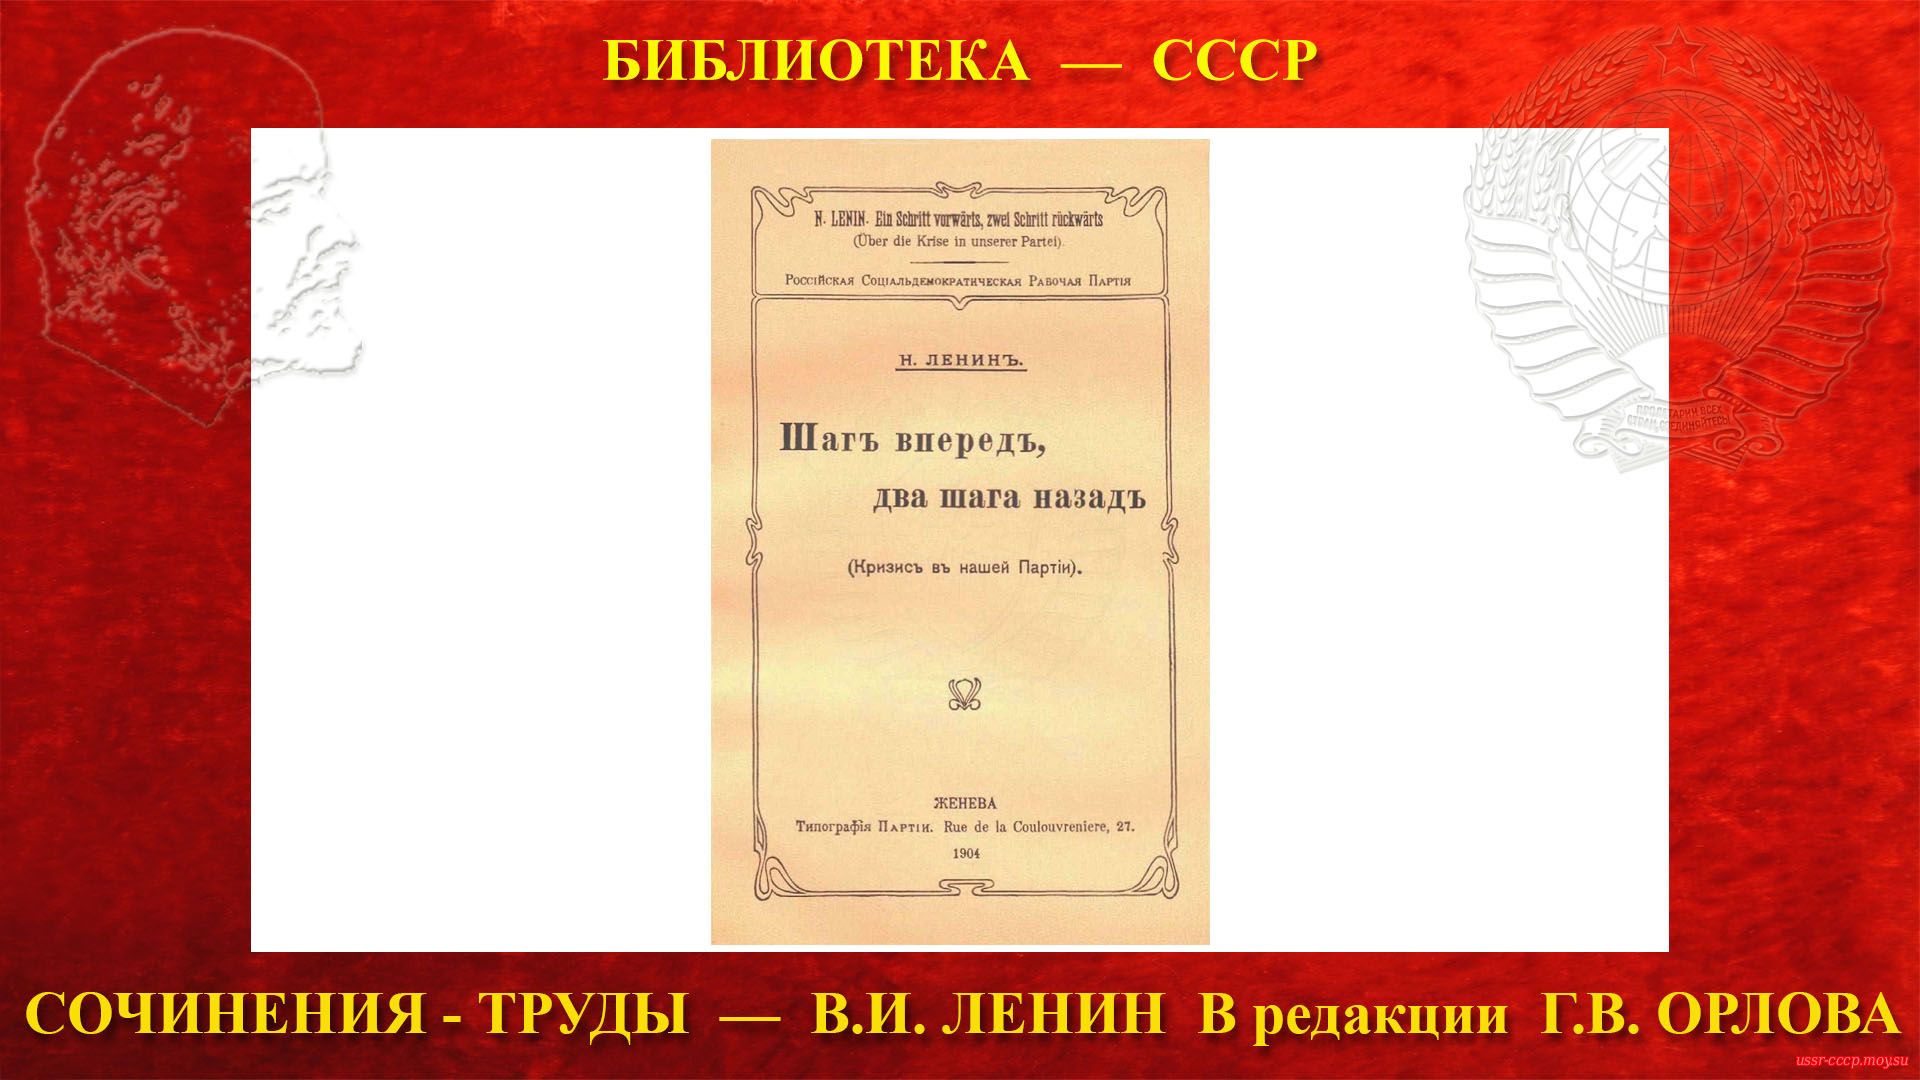 Обложка книги В. И. Ленина «Шаг вперед, два шага назад». — 1904 г. Уменьшено